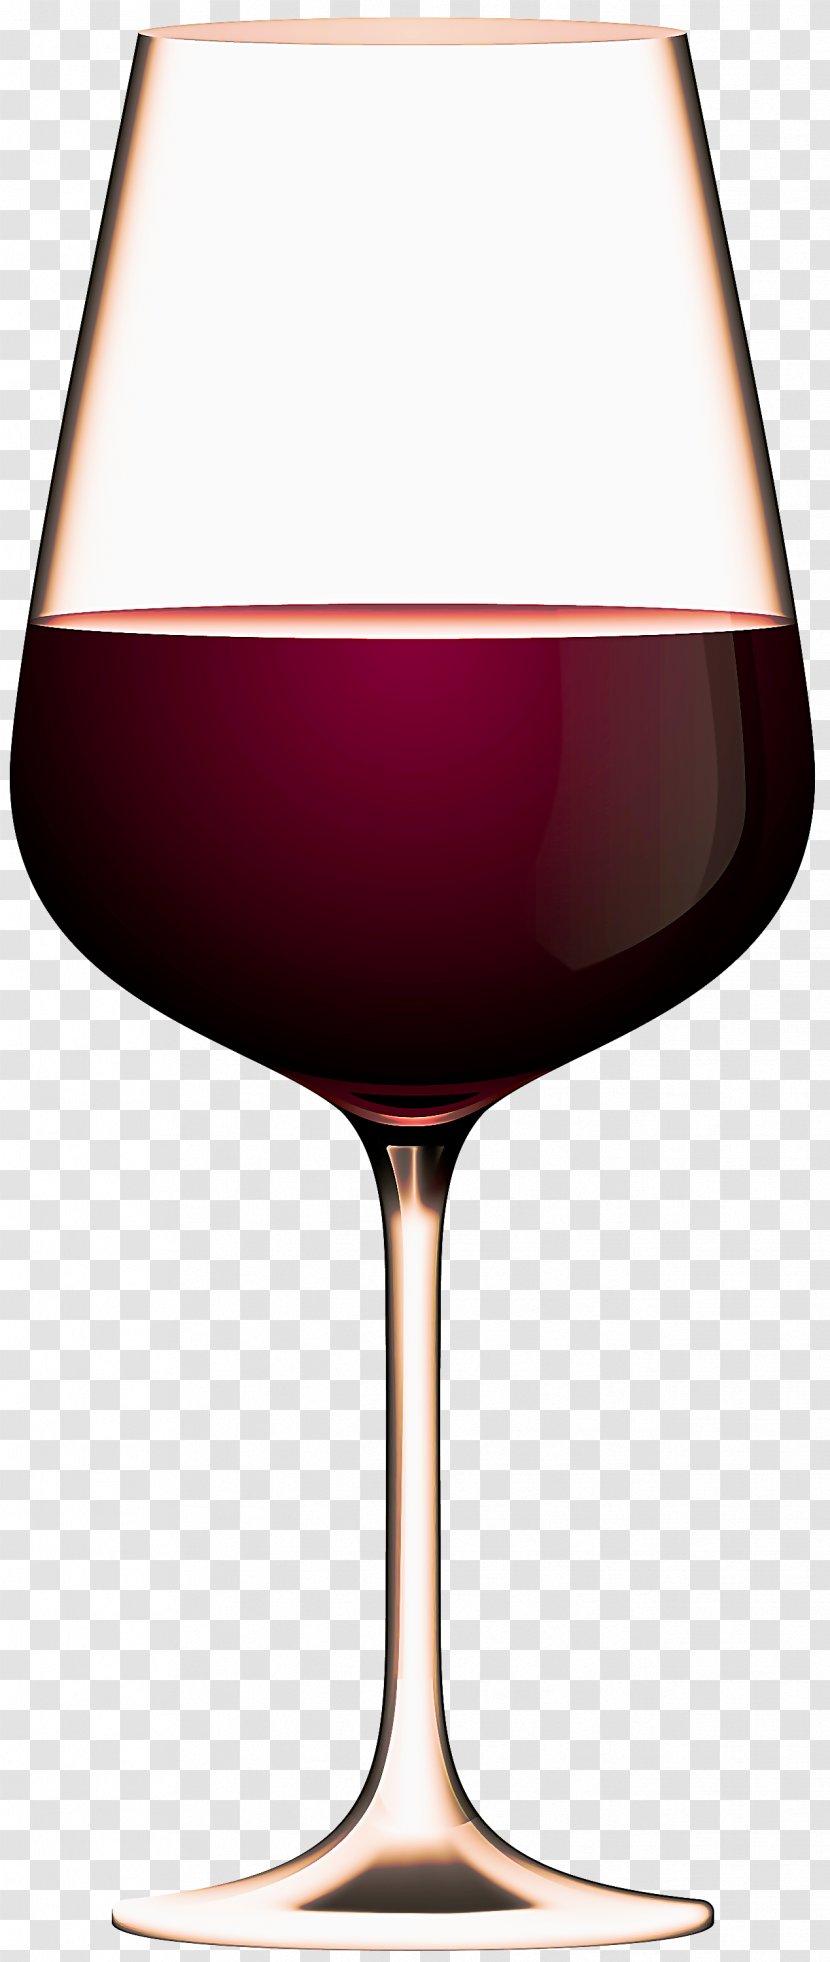 Wine Glass - Bottle Snifter Transparent PNG